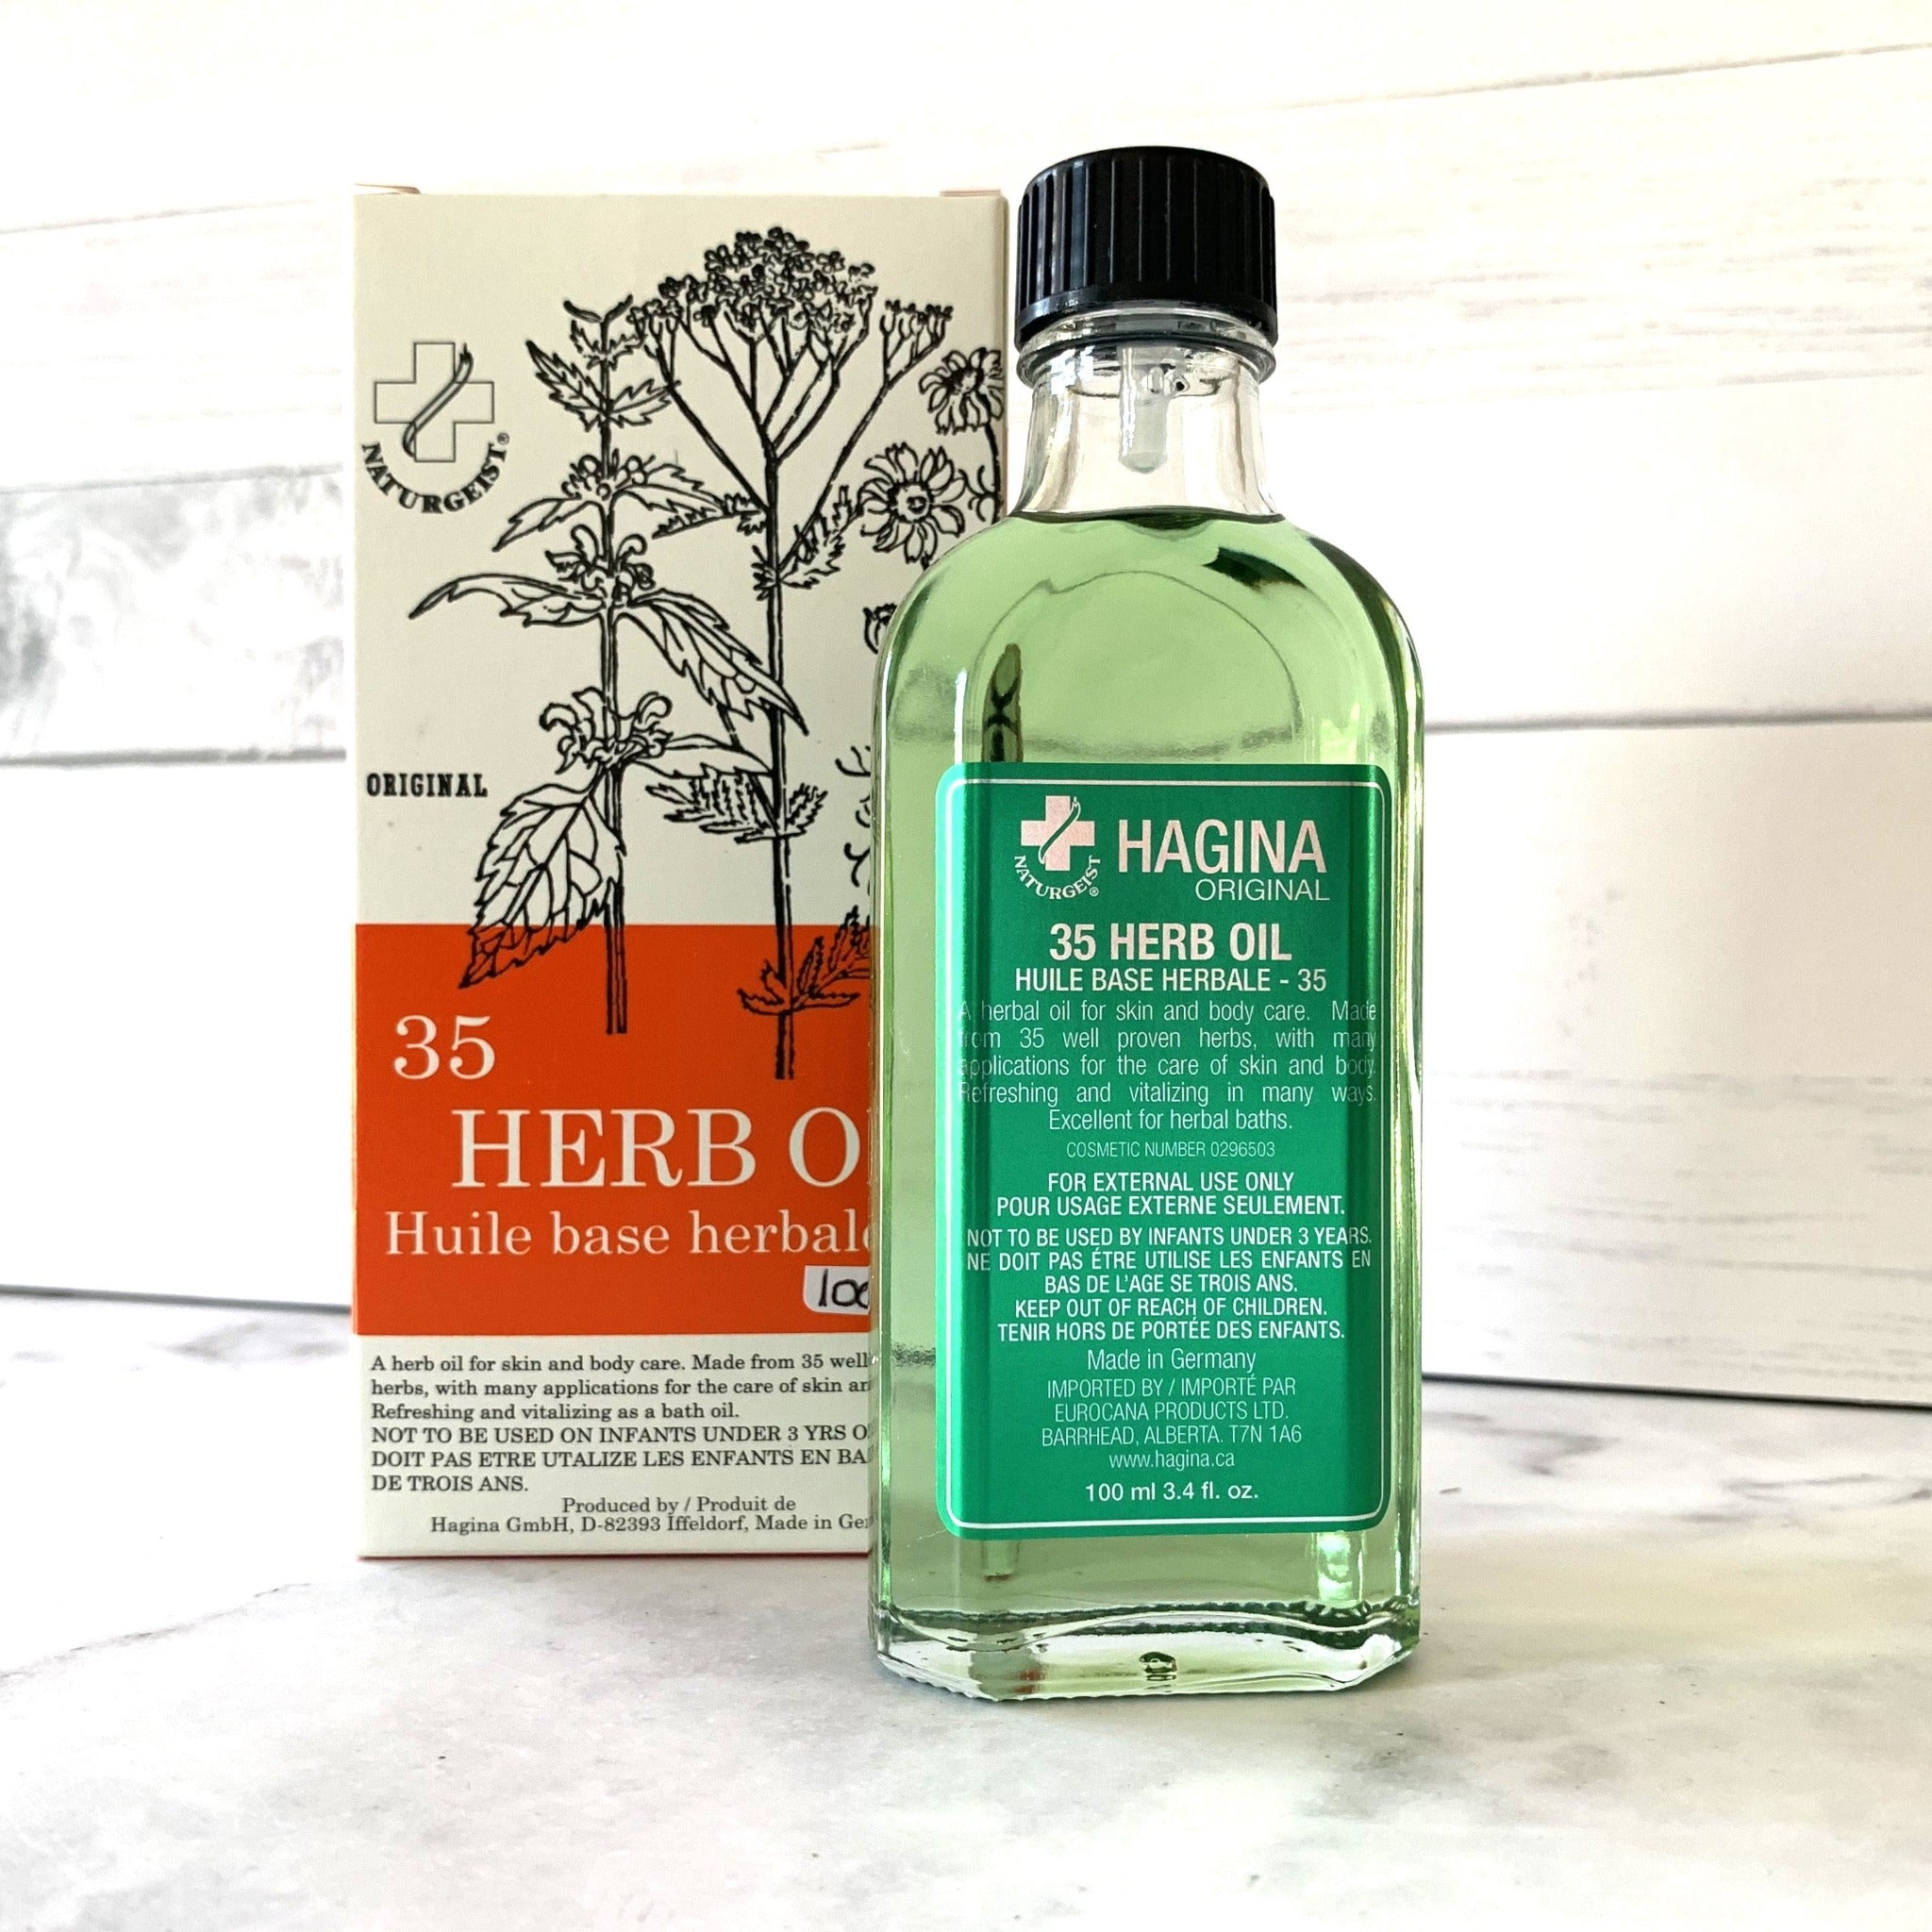 Hagina Original 35 Herb Oil